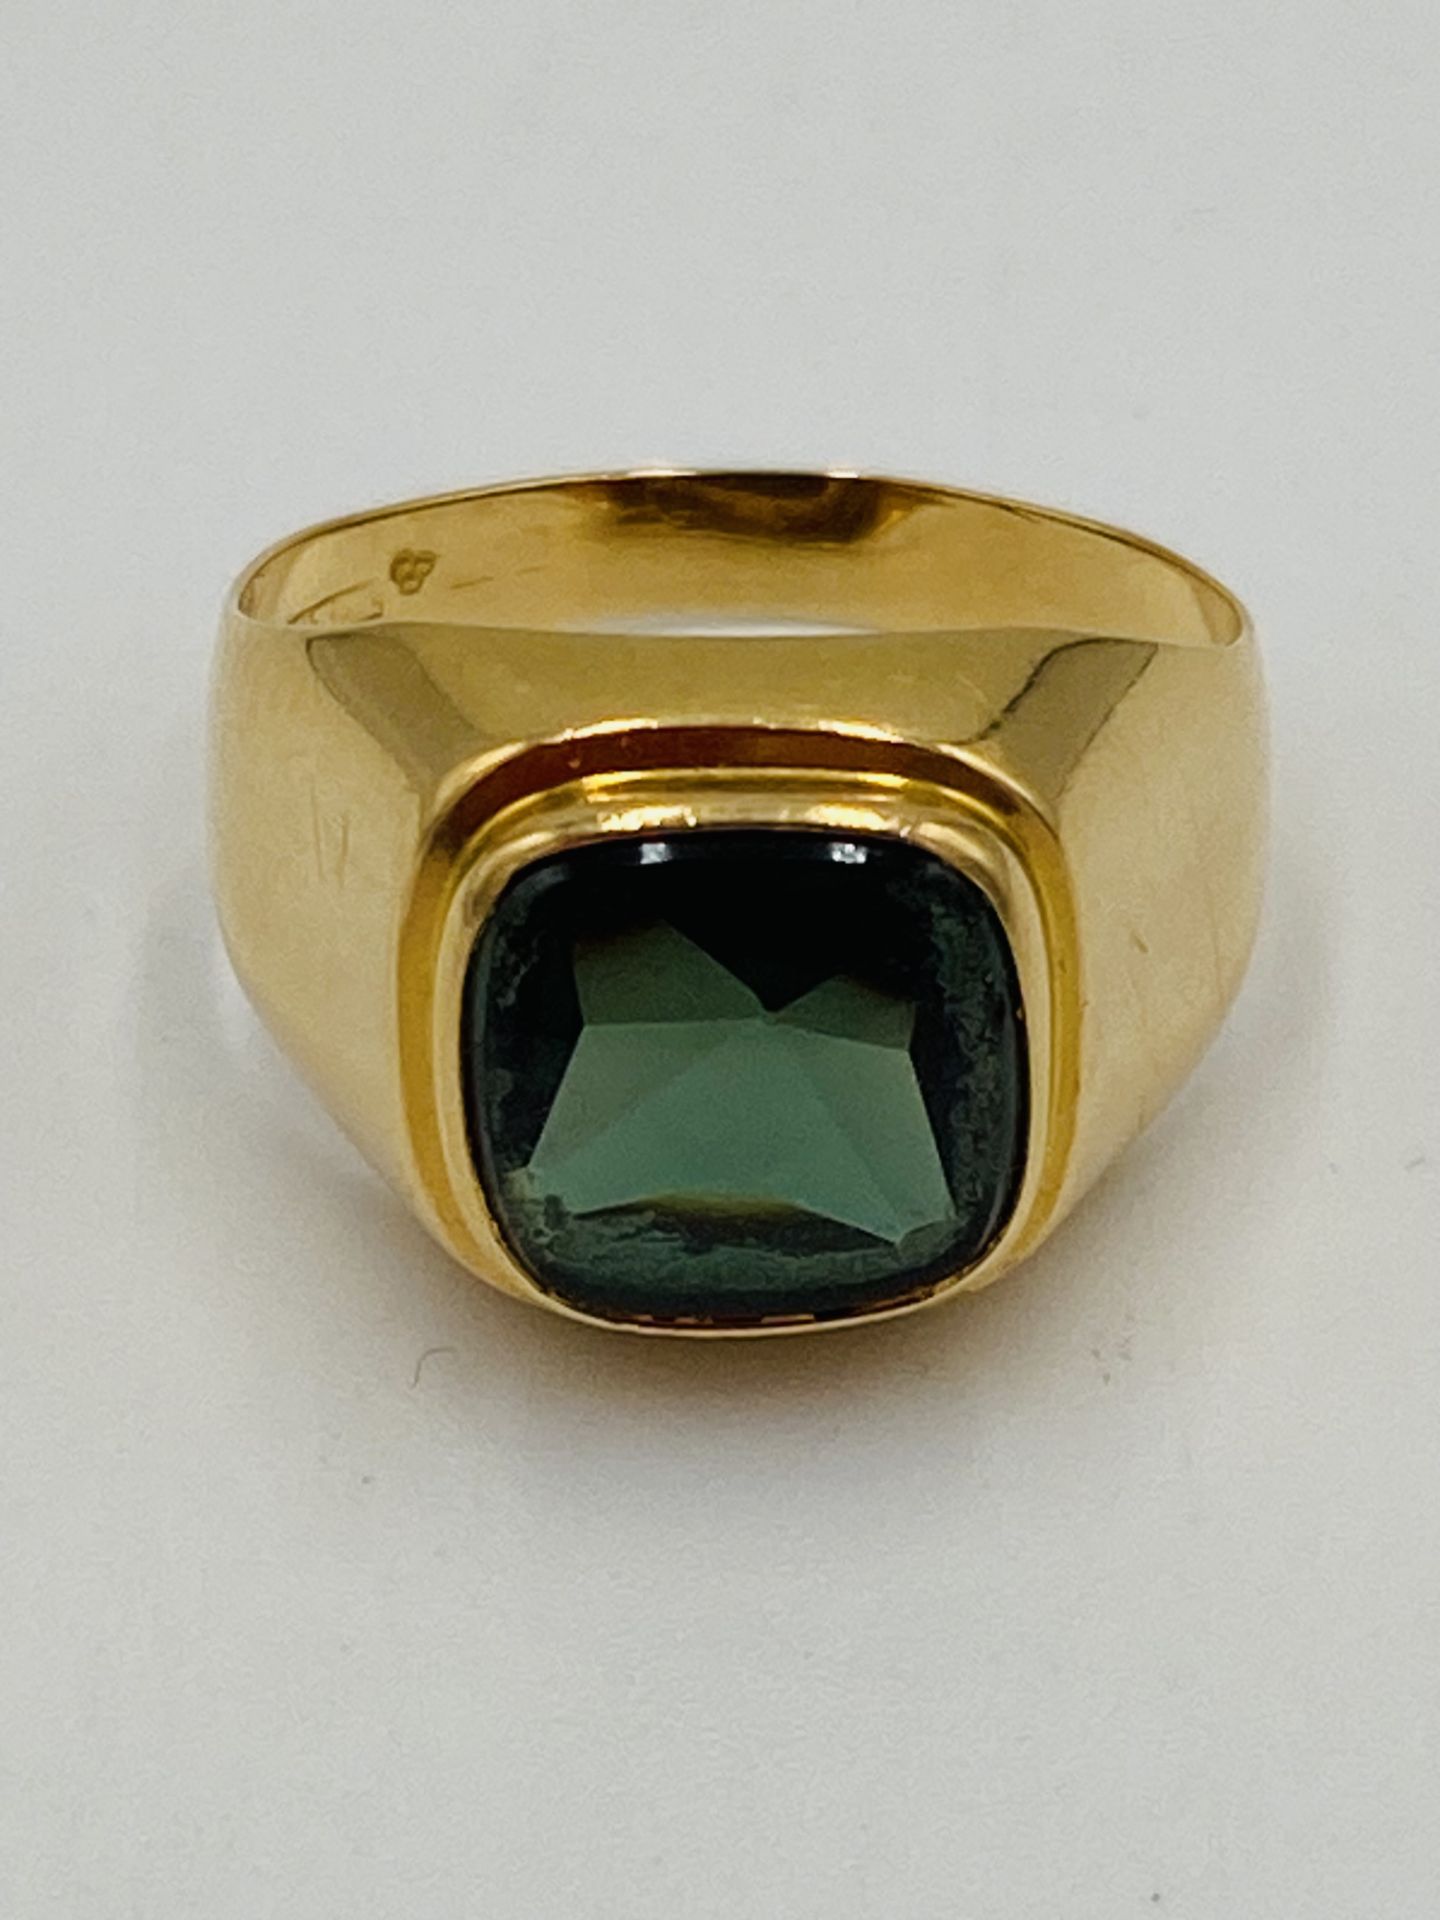 18ct gold signet ring - Image 2 of 5